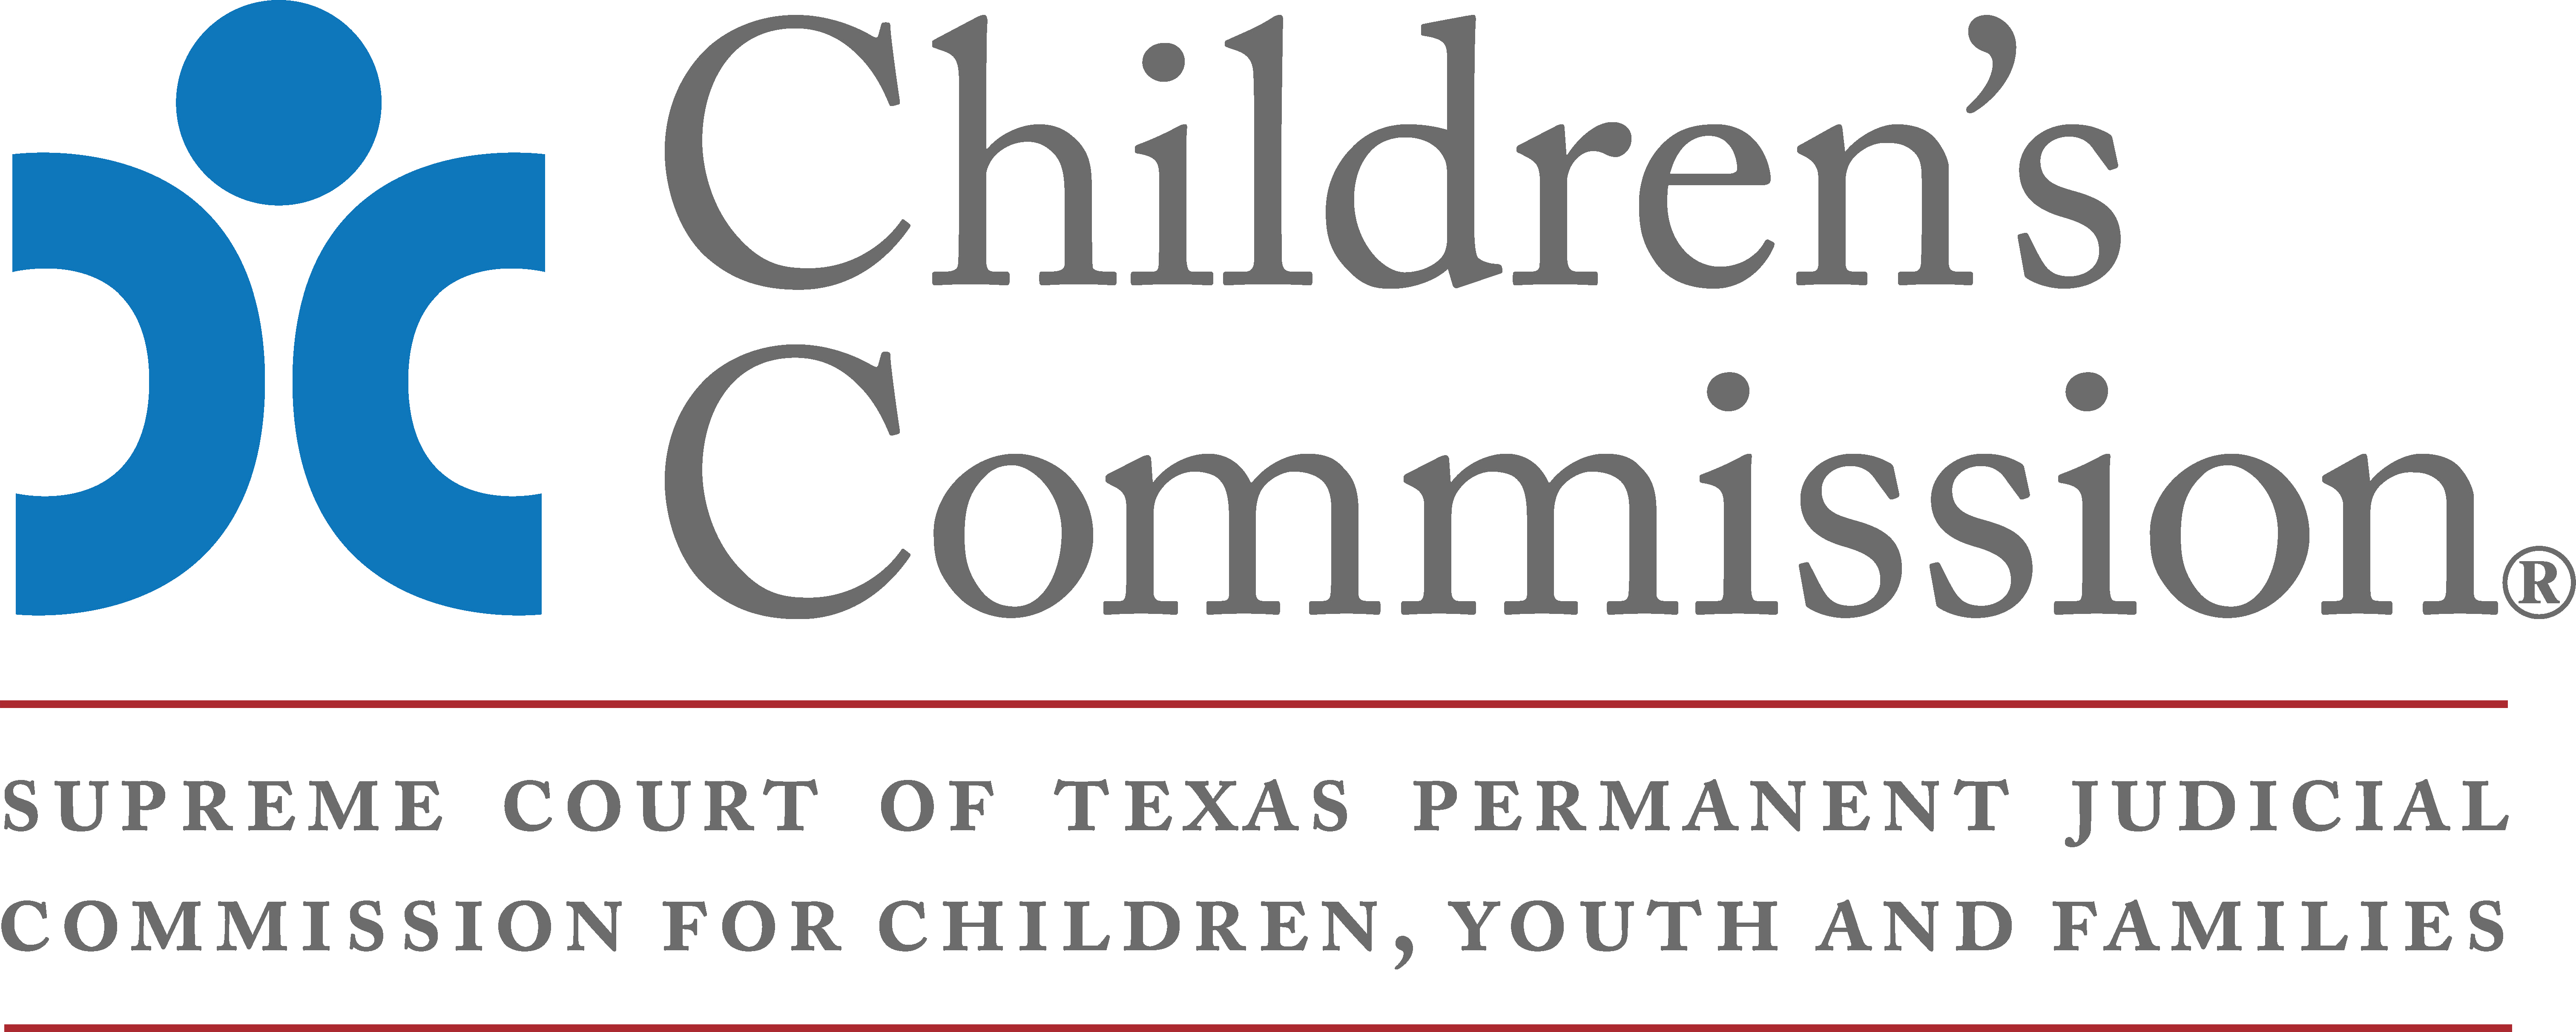 Texas Children's Commission logo